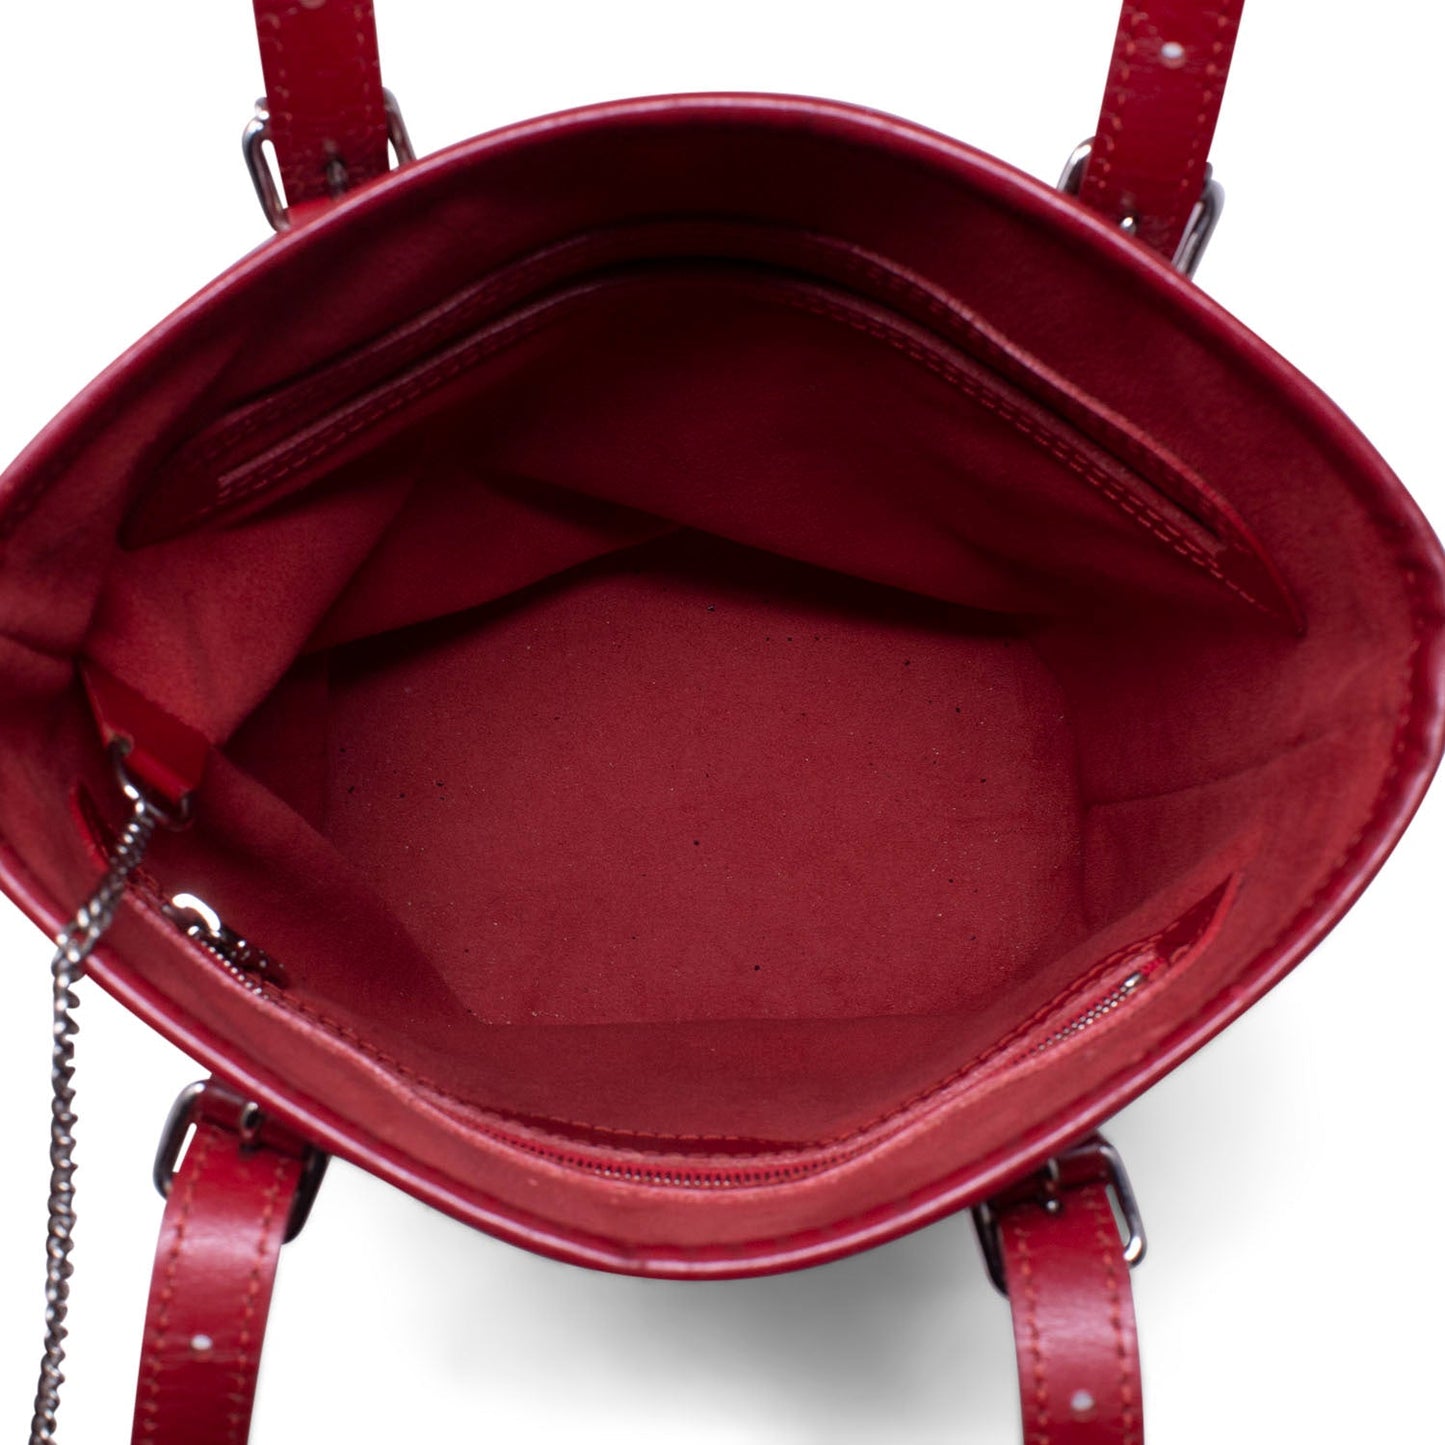 Louis Vuitton Bucket Pm Epi Rosso